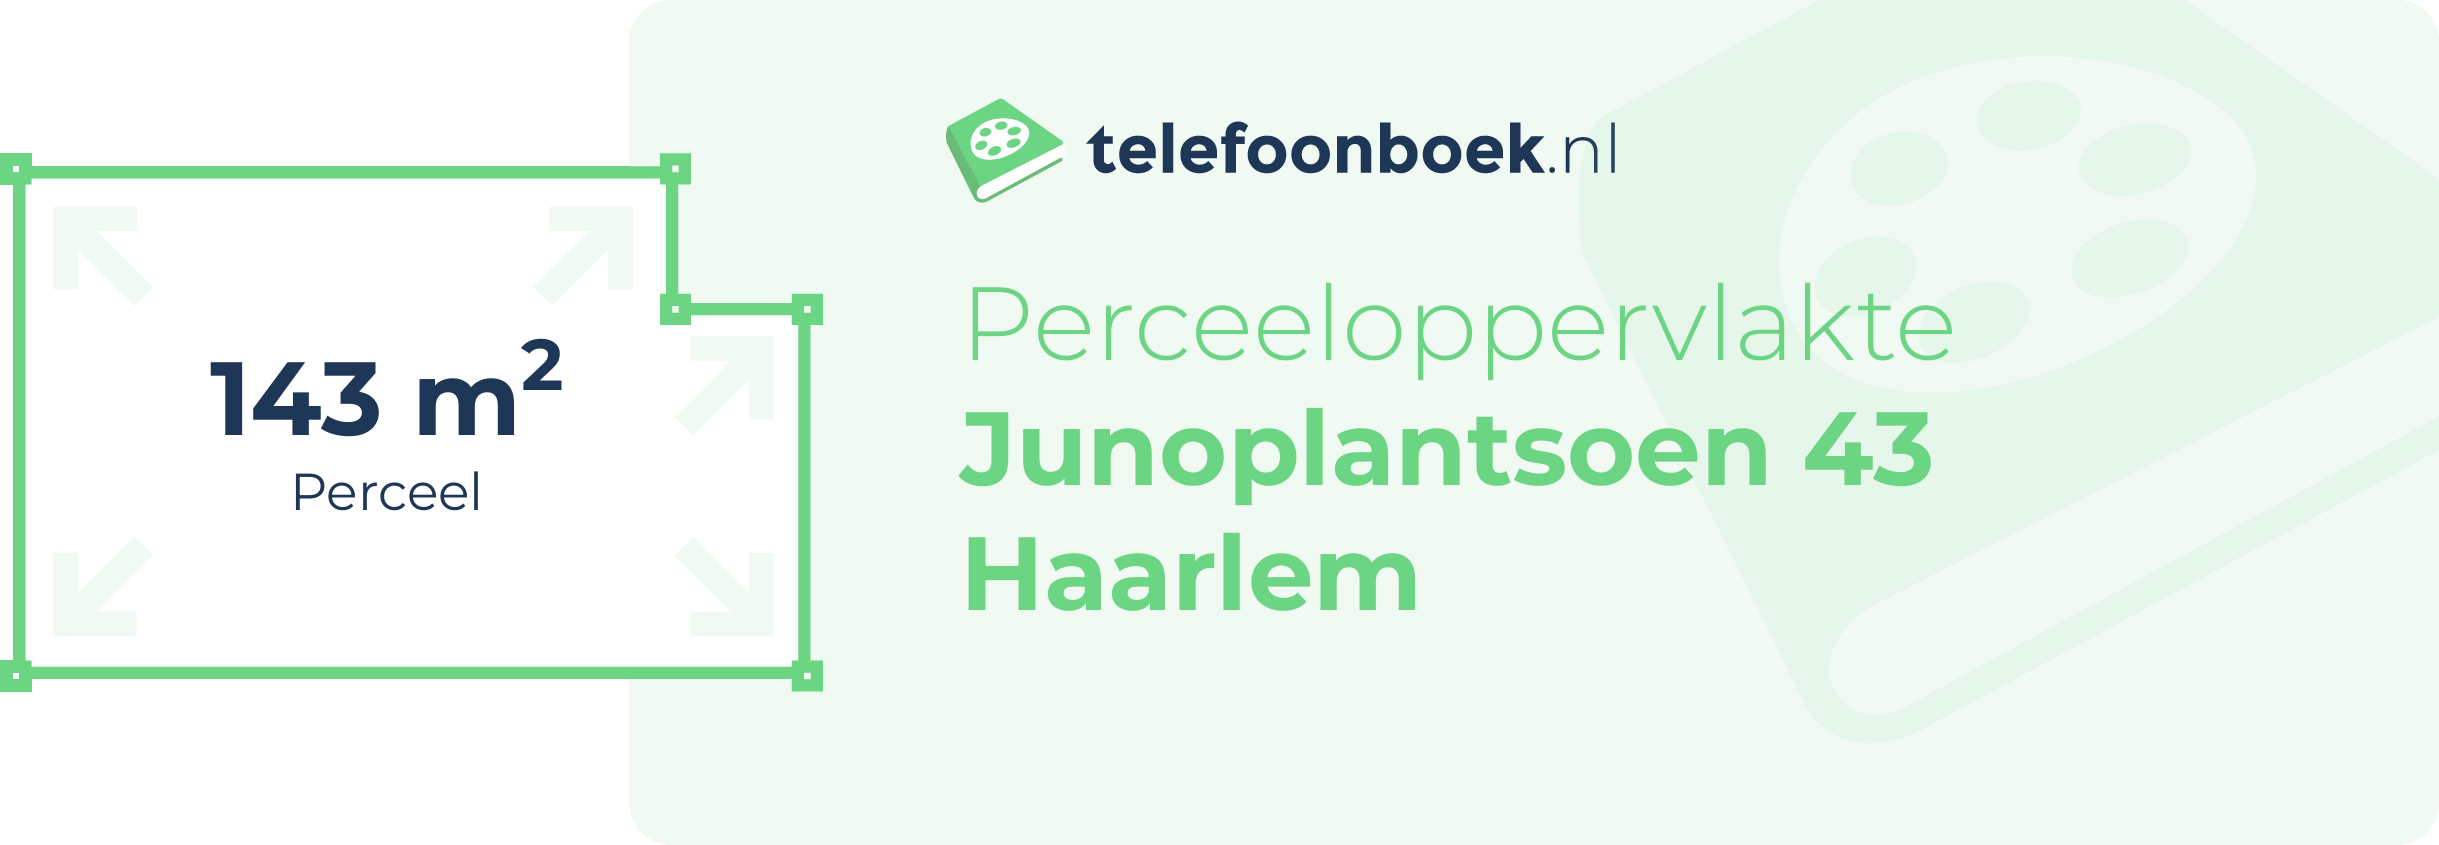 Perceeloppervlakte Junoplantsoen 43 Haarlem